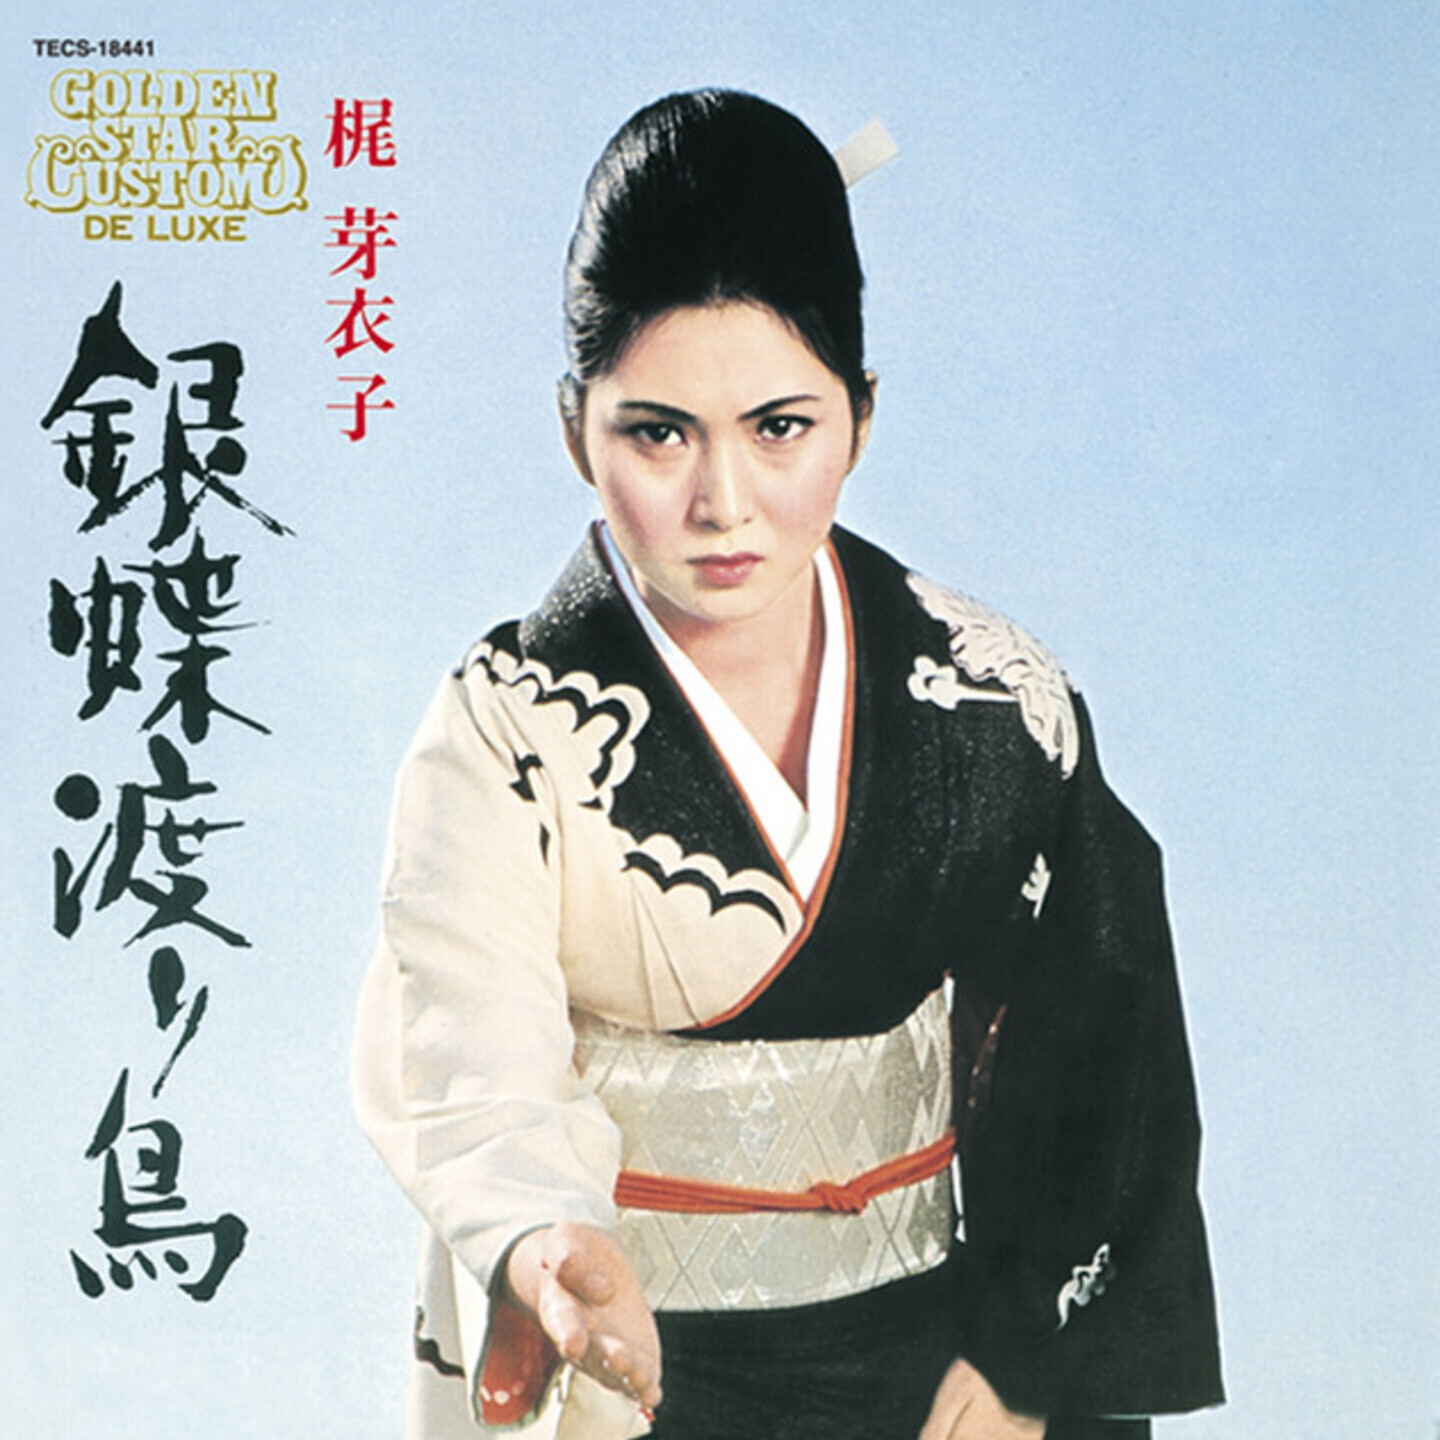 MEIKO KAJI - Gincho Wataridori LP Deluxe Gatefold LP Edition with 2p Insert and OBI Black Vinyl